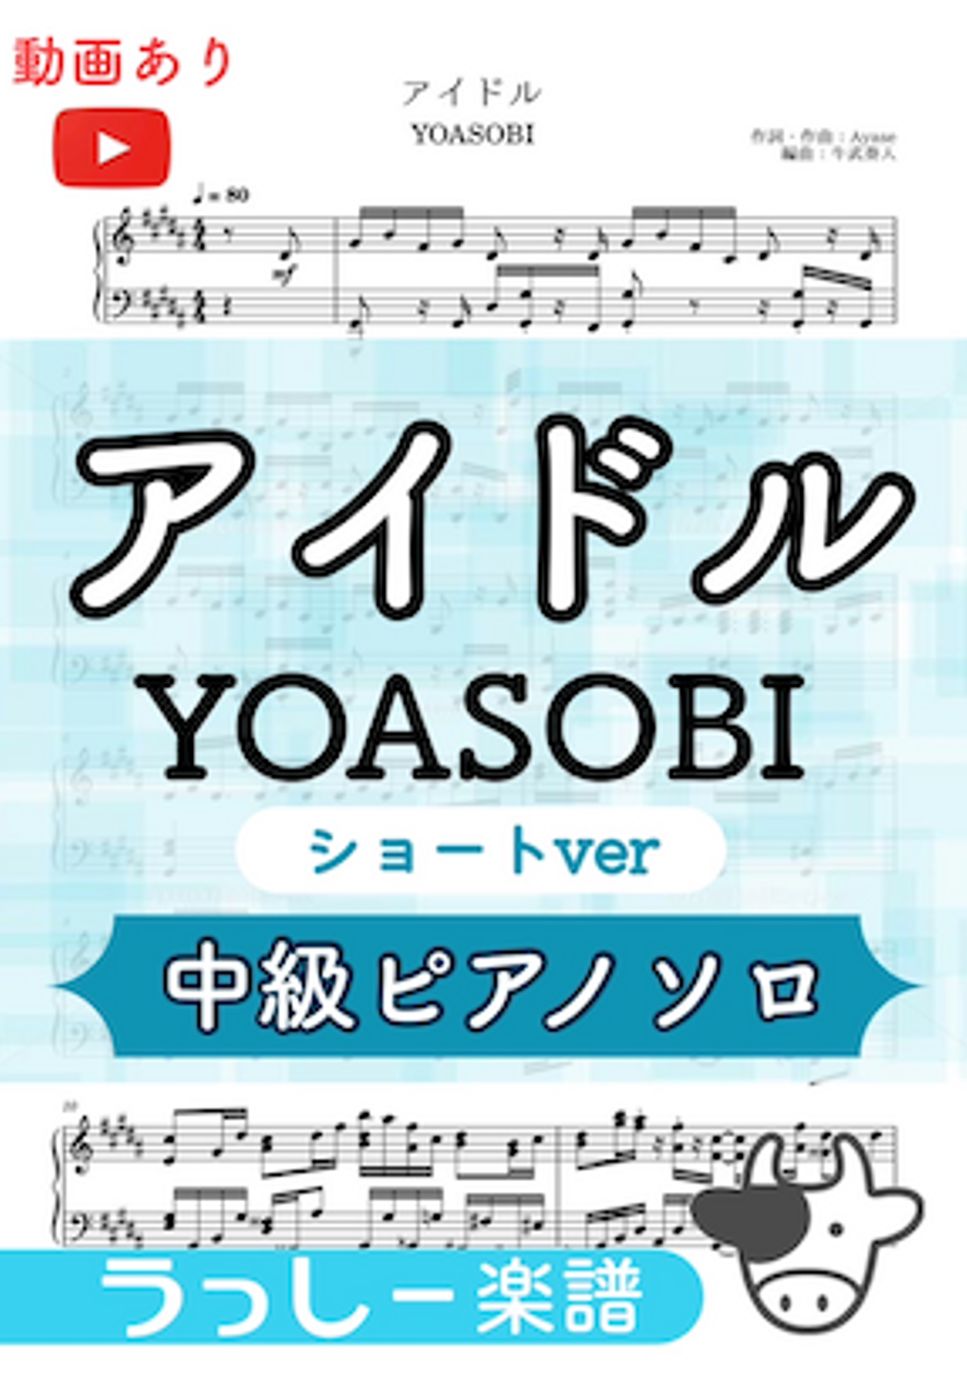 YOASOBI - アイドル (ピアノ/YOASOBI/アイドル) by 牛武奏人